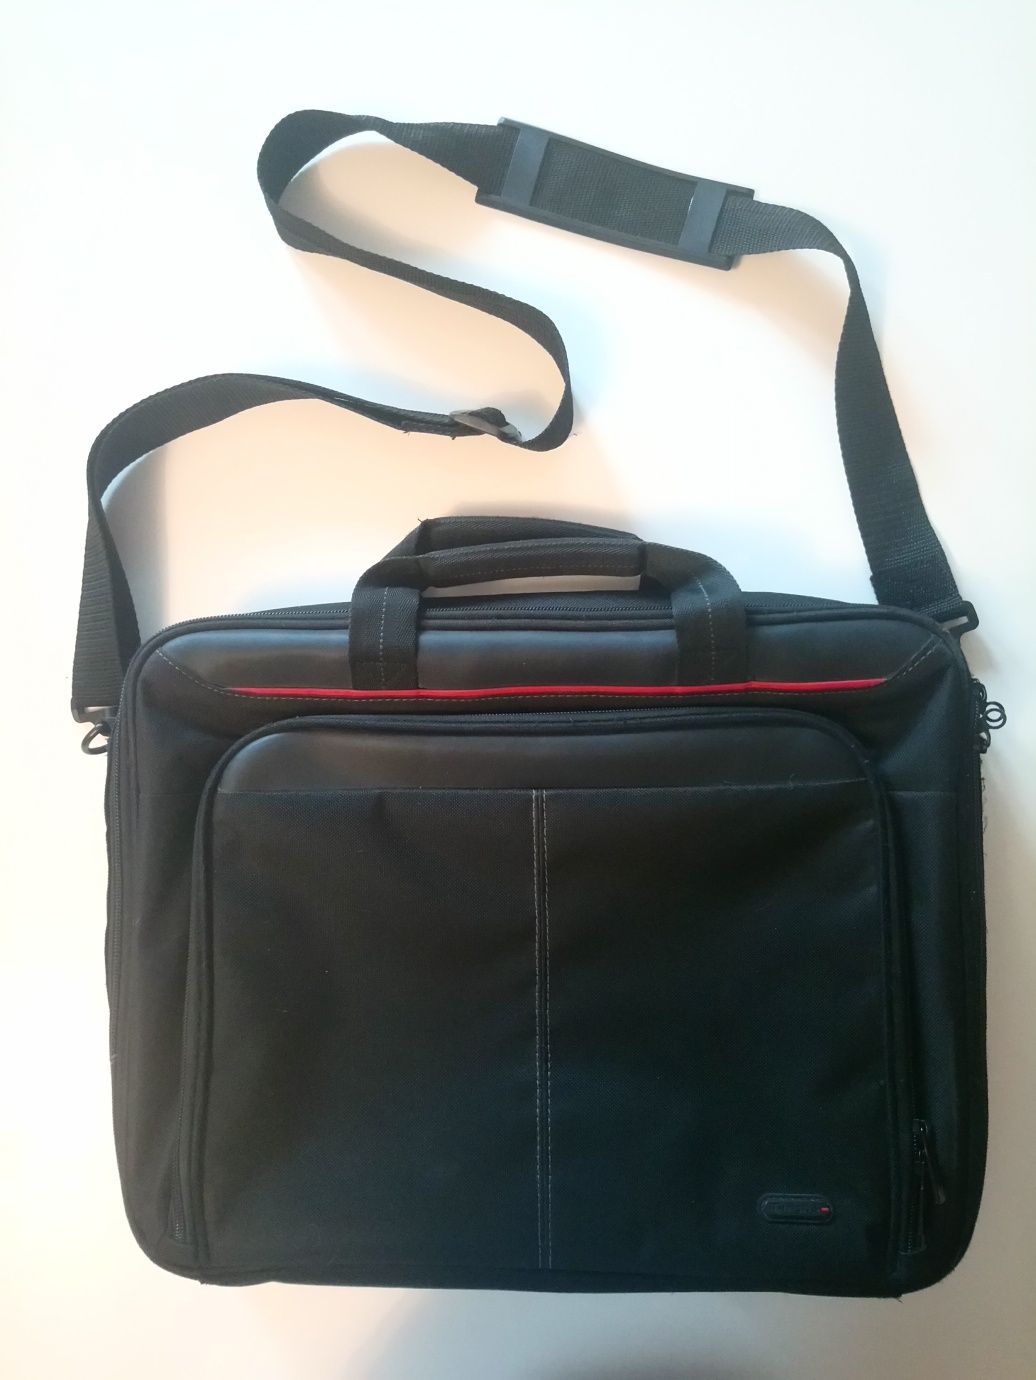 Solidna torba na laptopa Targus, 41x32 cm, boczna kieszeń, pasek